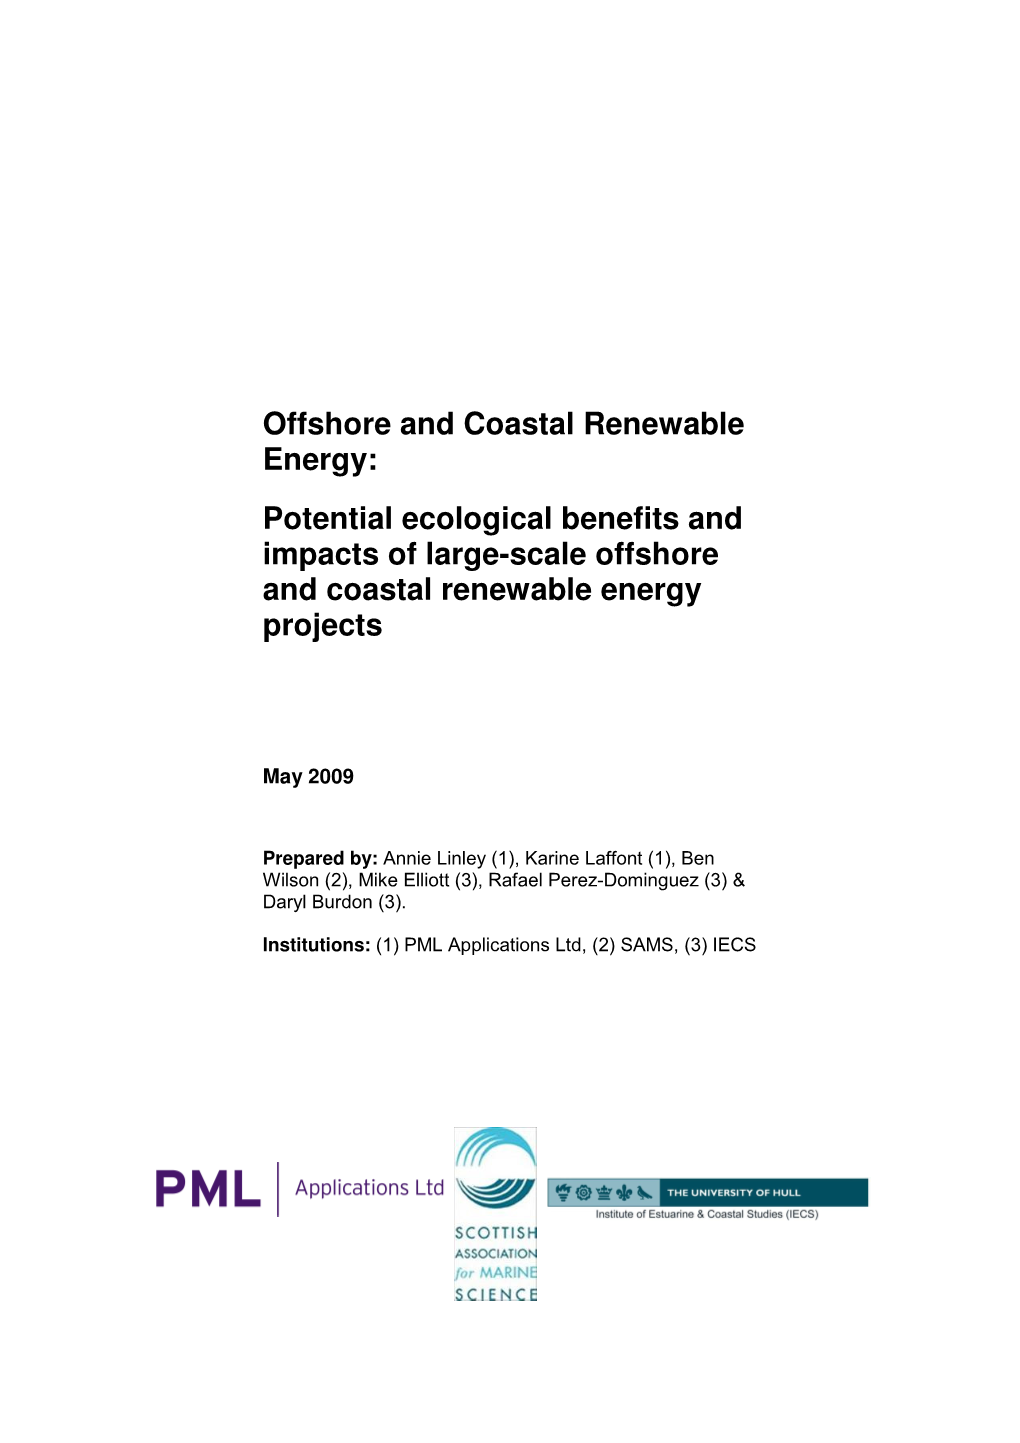 Offshore and Coastal Renewable Energy